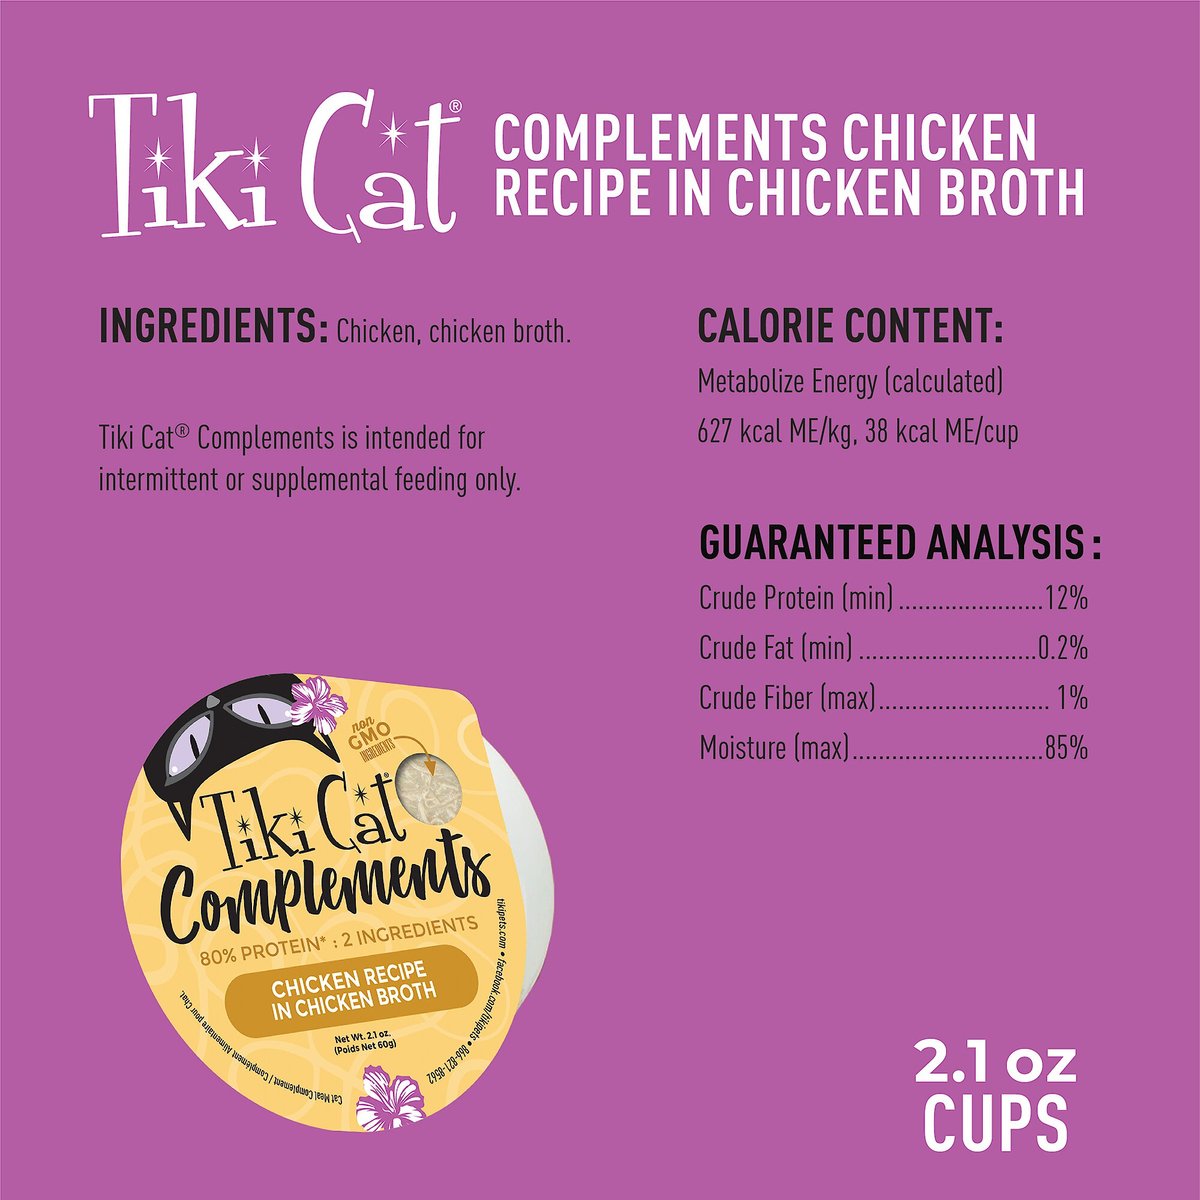 Tiki Cat Wet Cat Food Complements Chicken Recipe in Chicken Broth 2.1oz